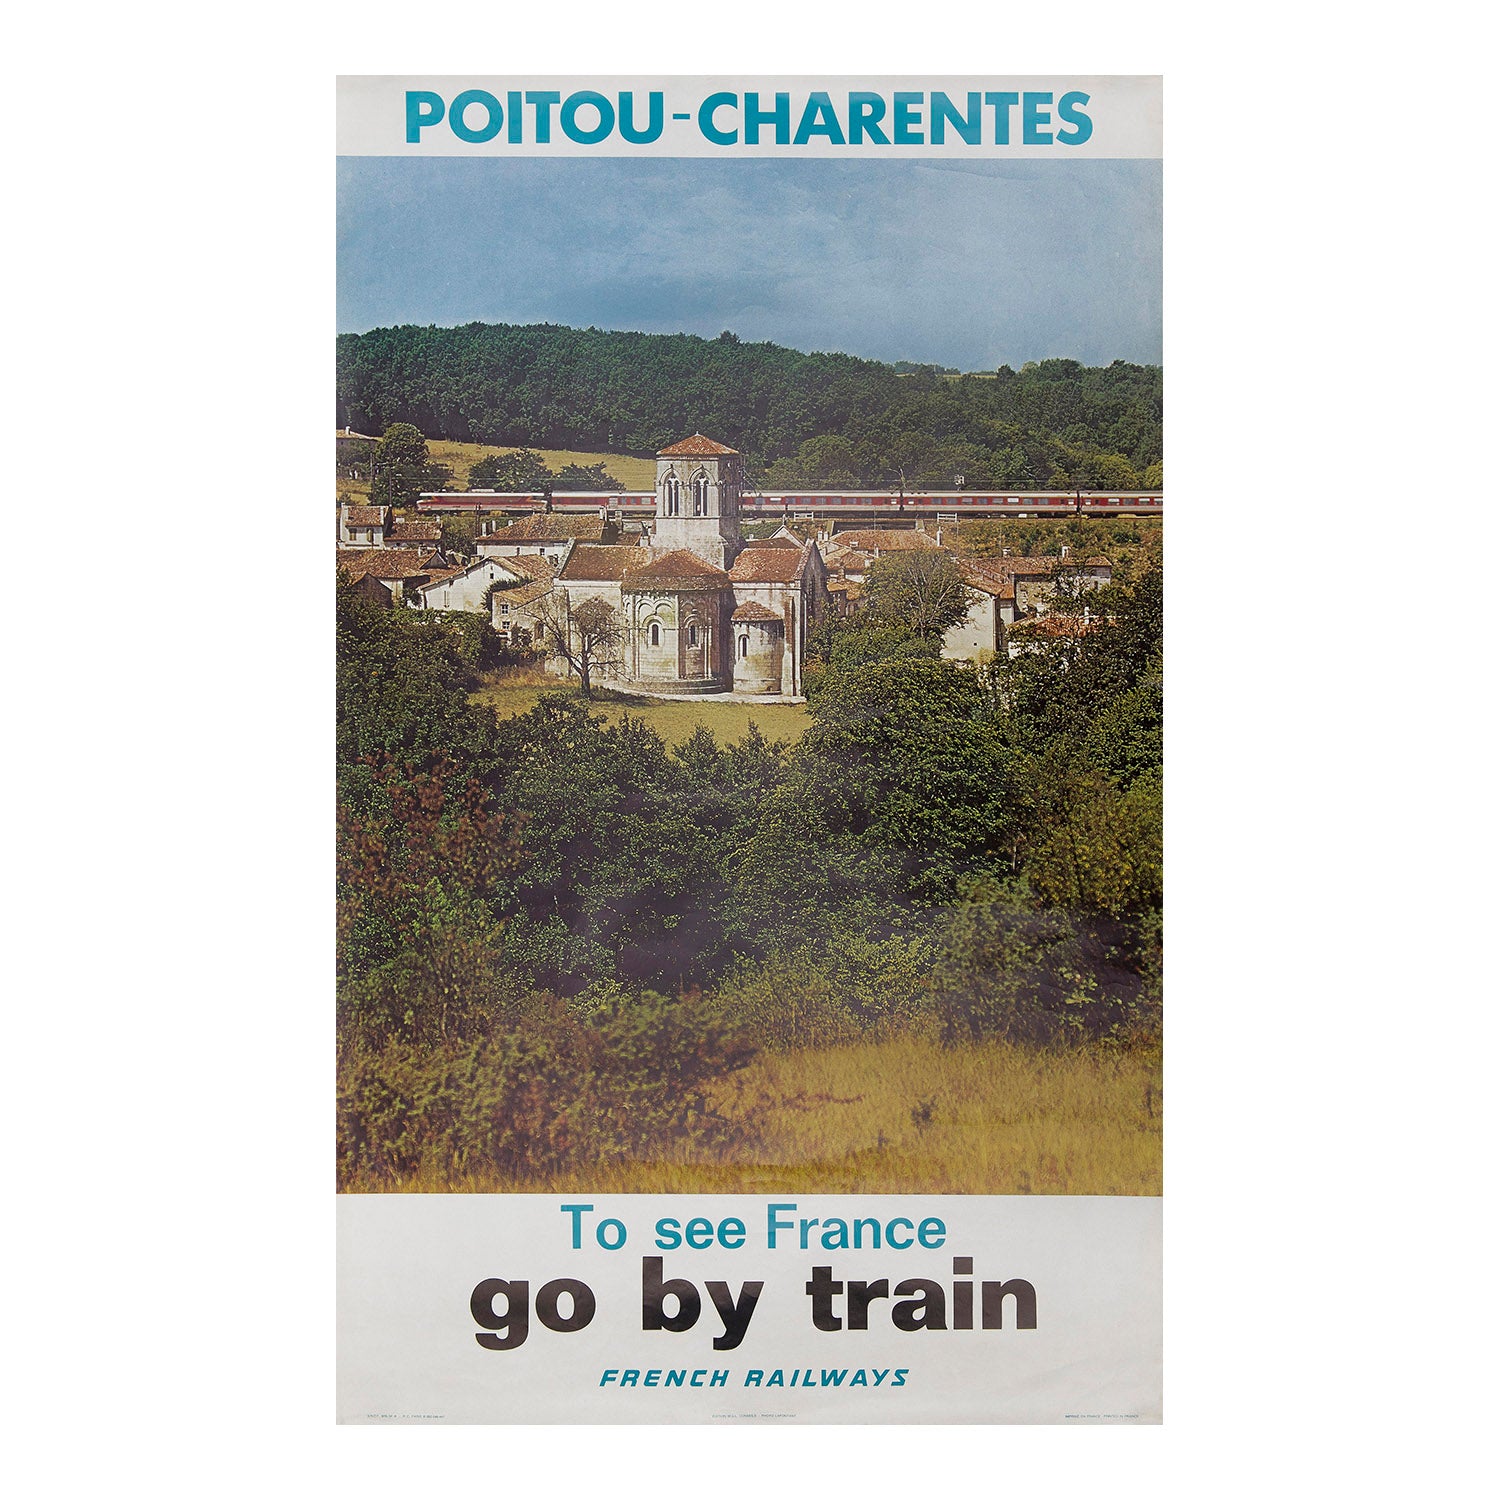 Poitou-Charentes. To see France go by train. French Railways